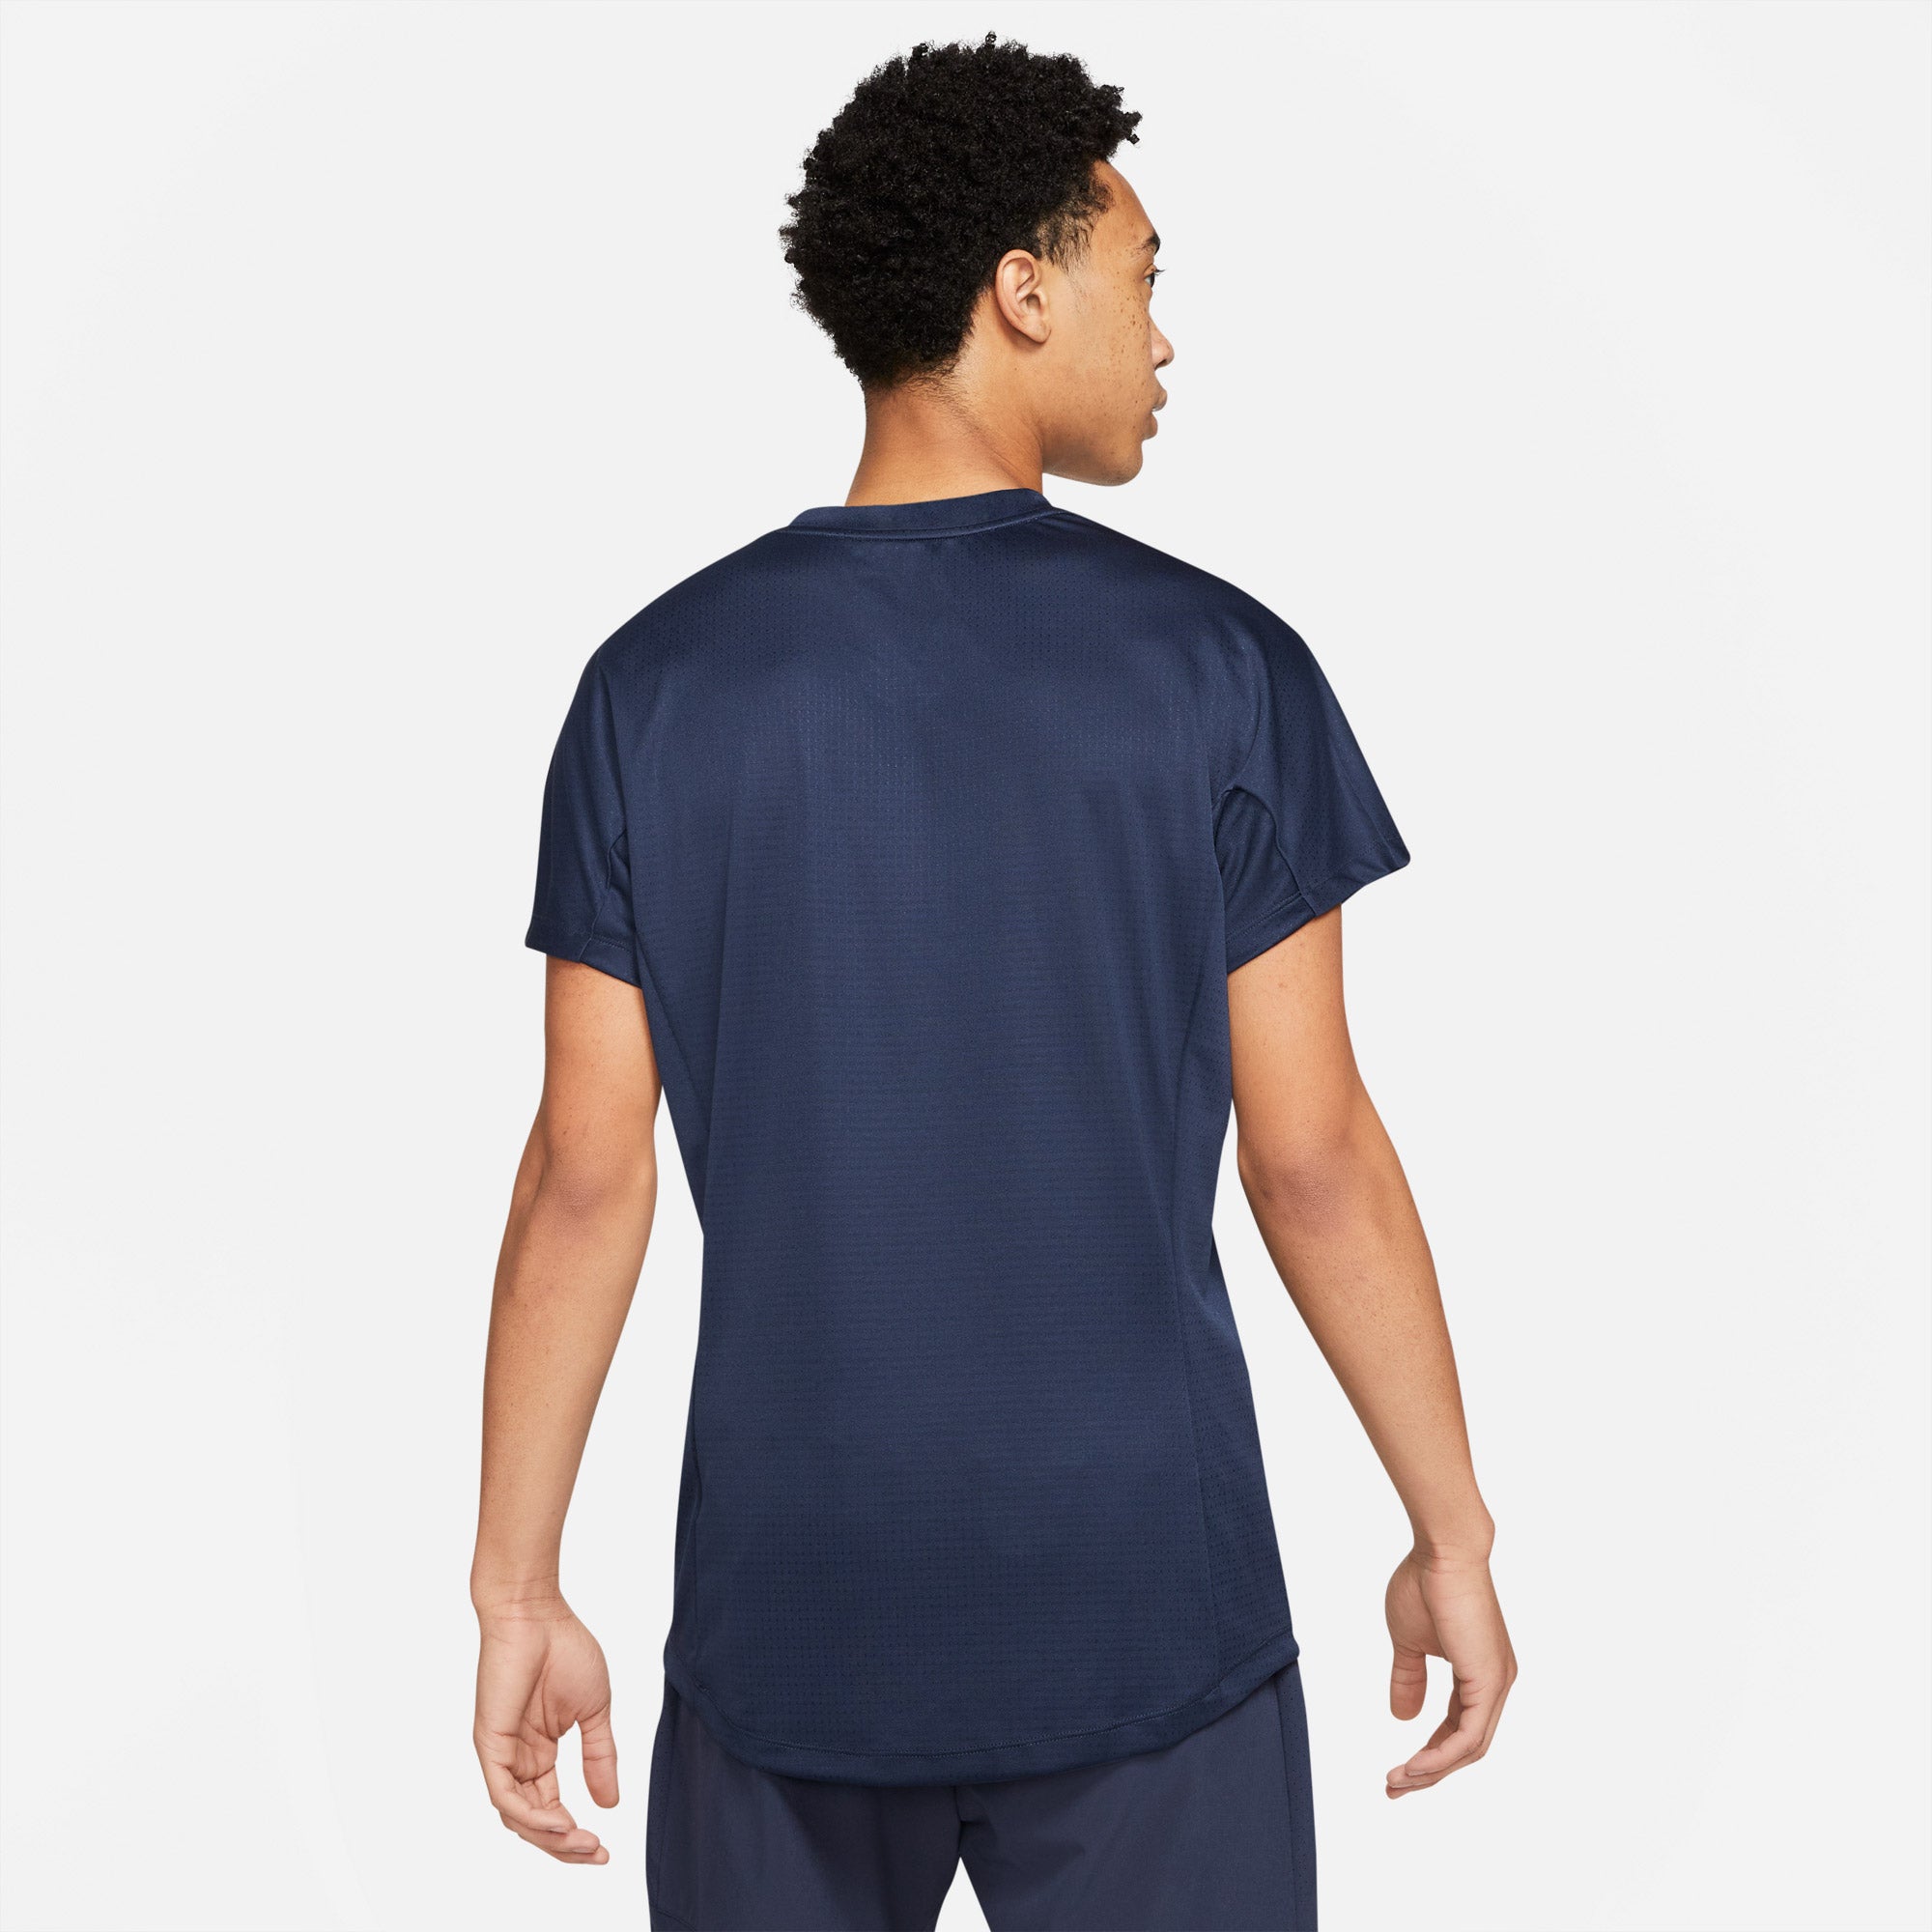 Nike Rafa Dri-FIT Challenger Men's Tennis Shirt Blue (2)